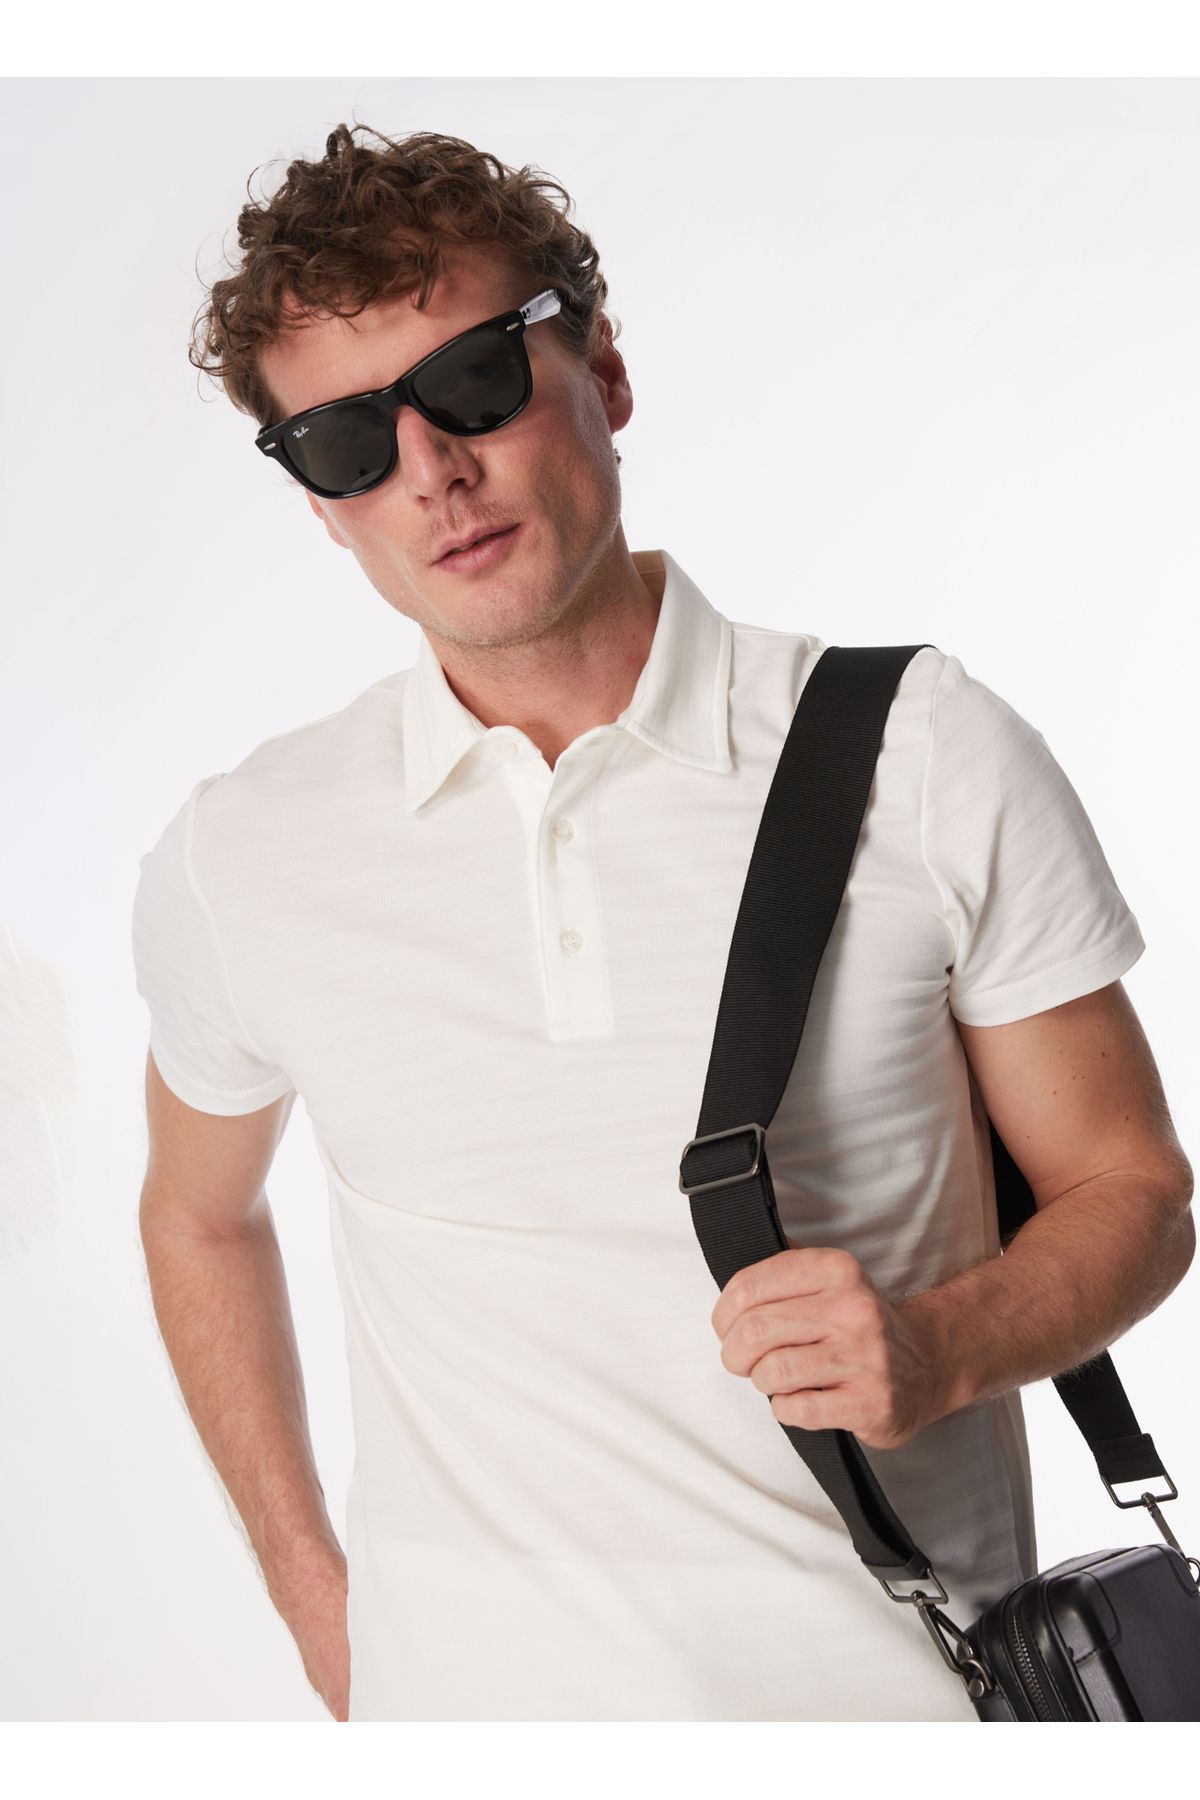 Fabrika Kırık Beyaz Erkek Basic Jakarlı Polo T-shirt F4sm-tst 0728